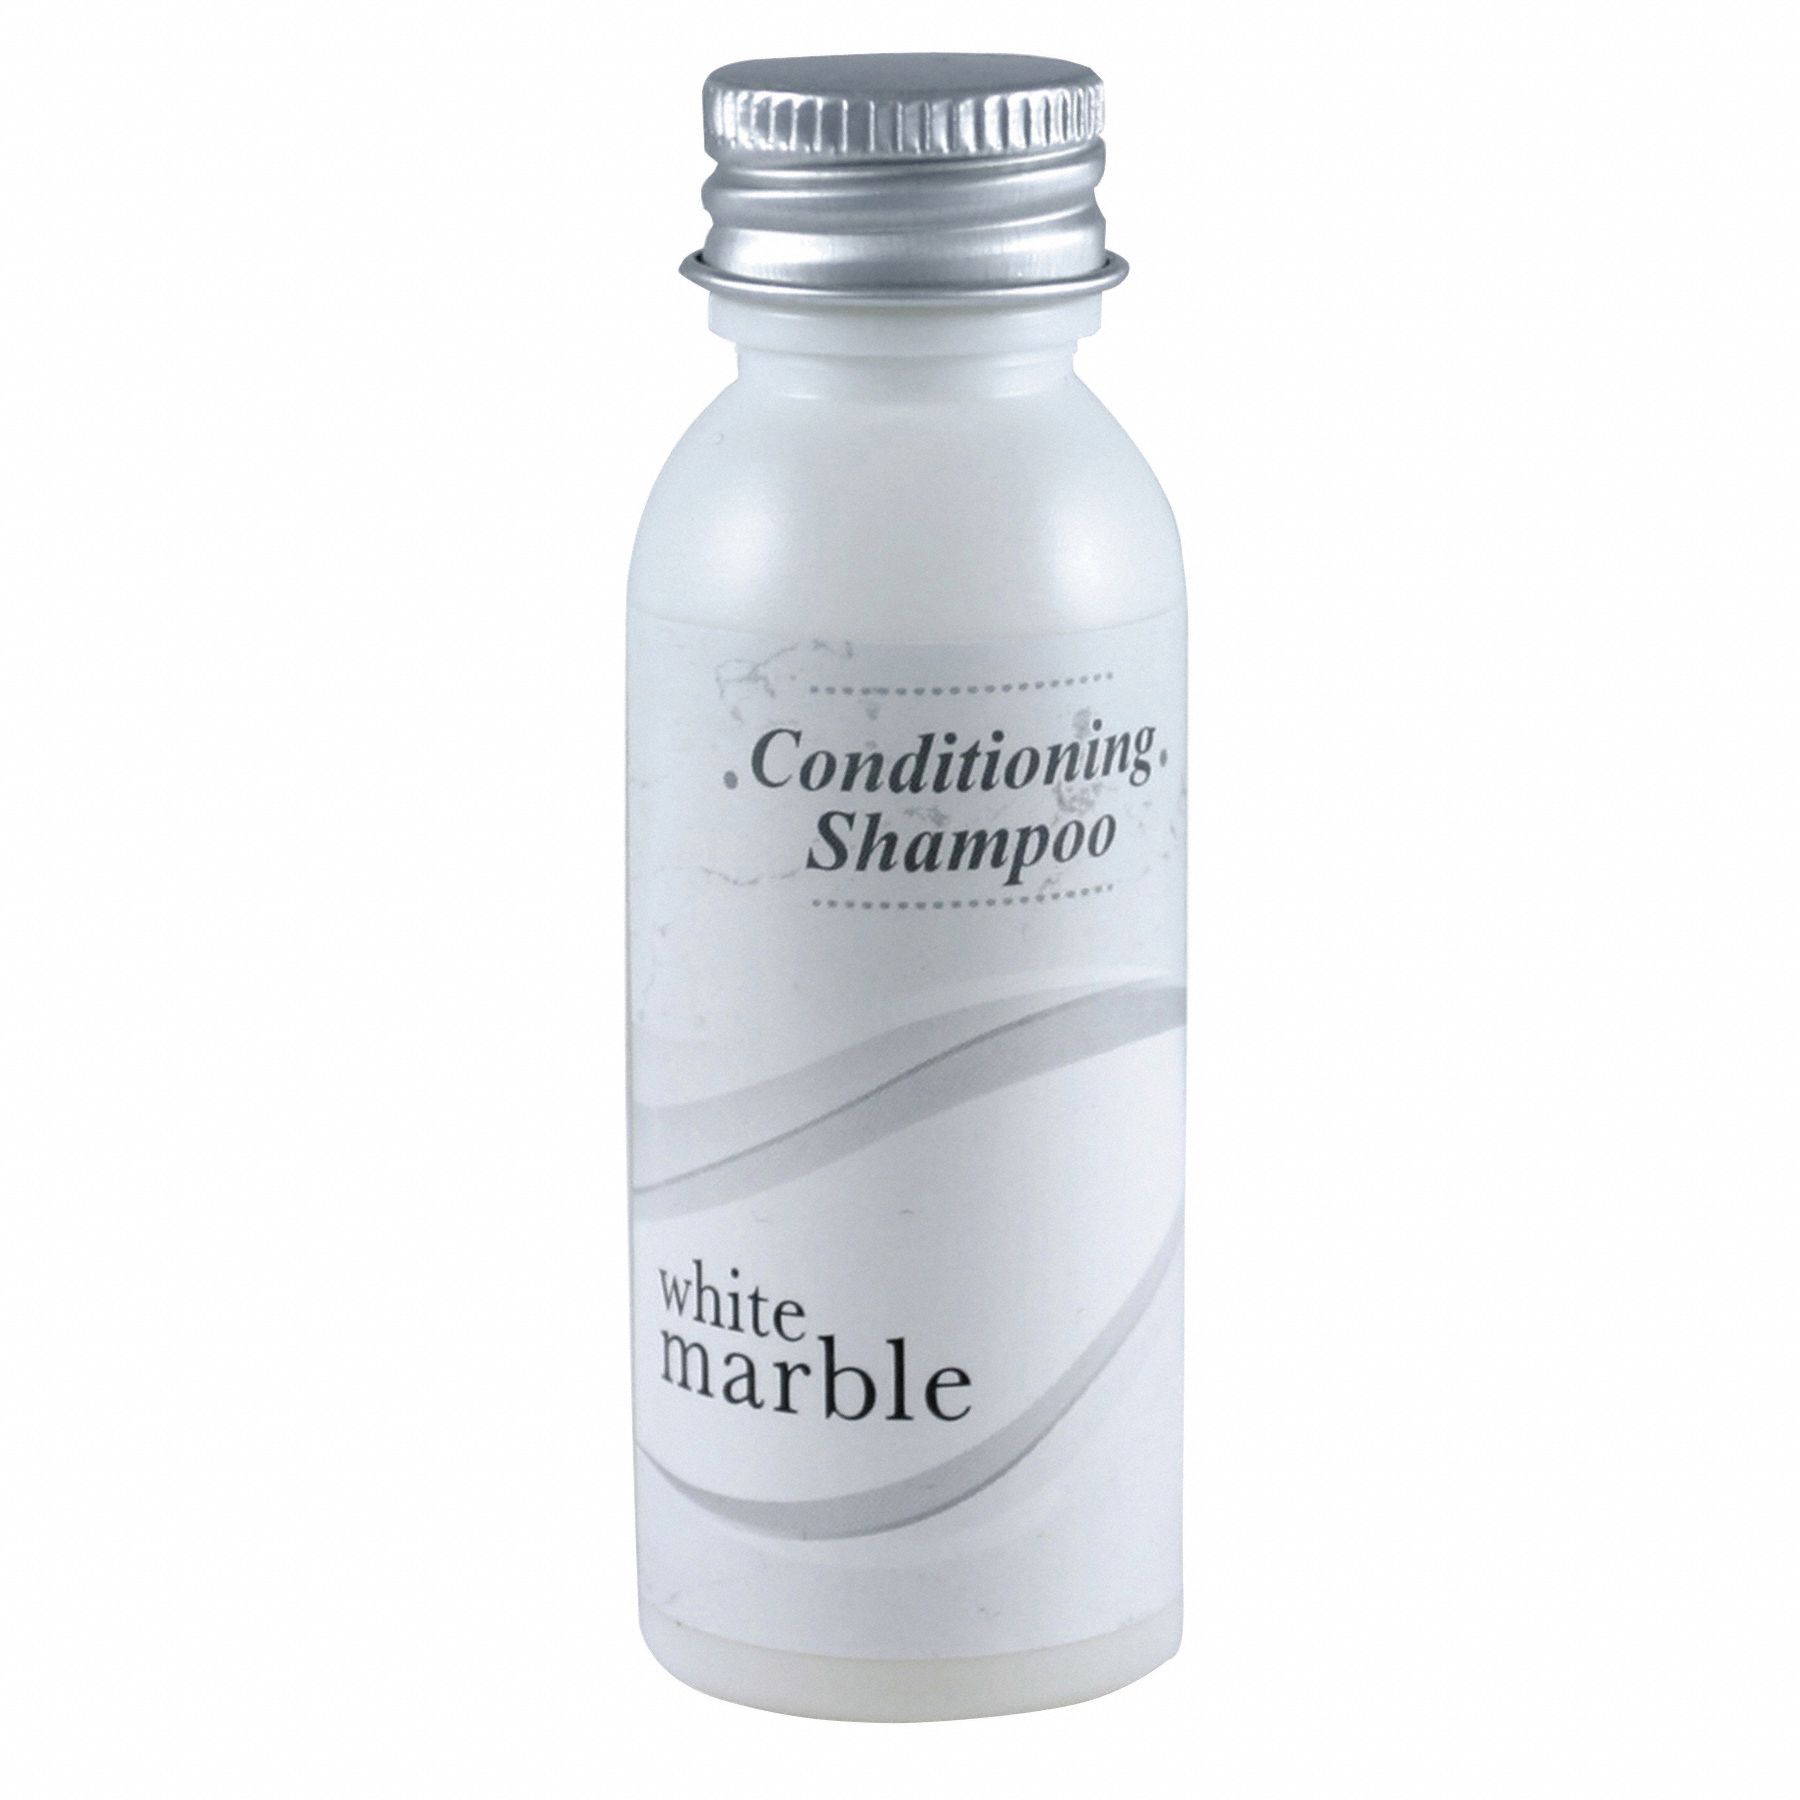 Shampoo and Conditioner: Squeeze Bottle, 0.75 oz Size, Clean, Aloe Vera, 288 PK